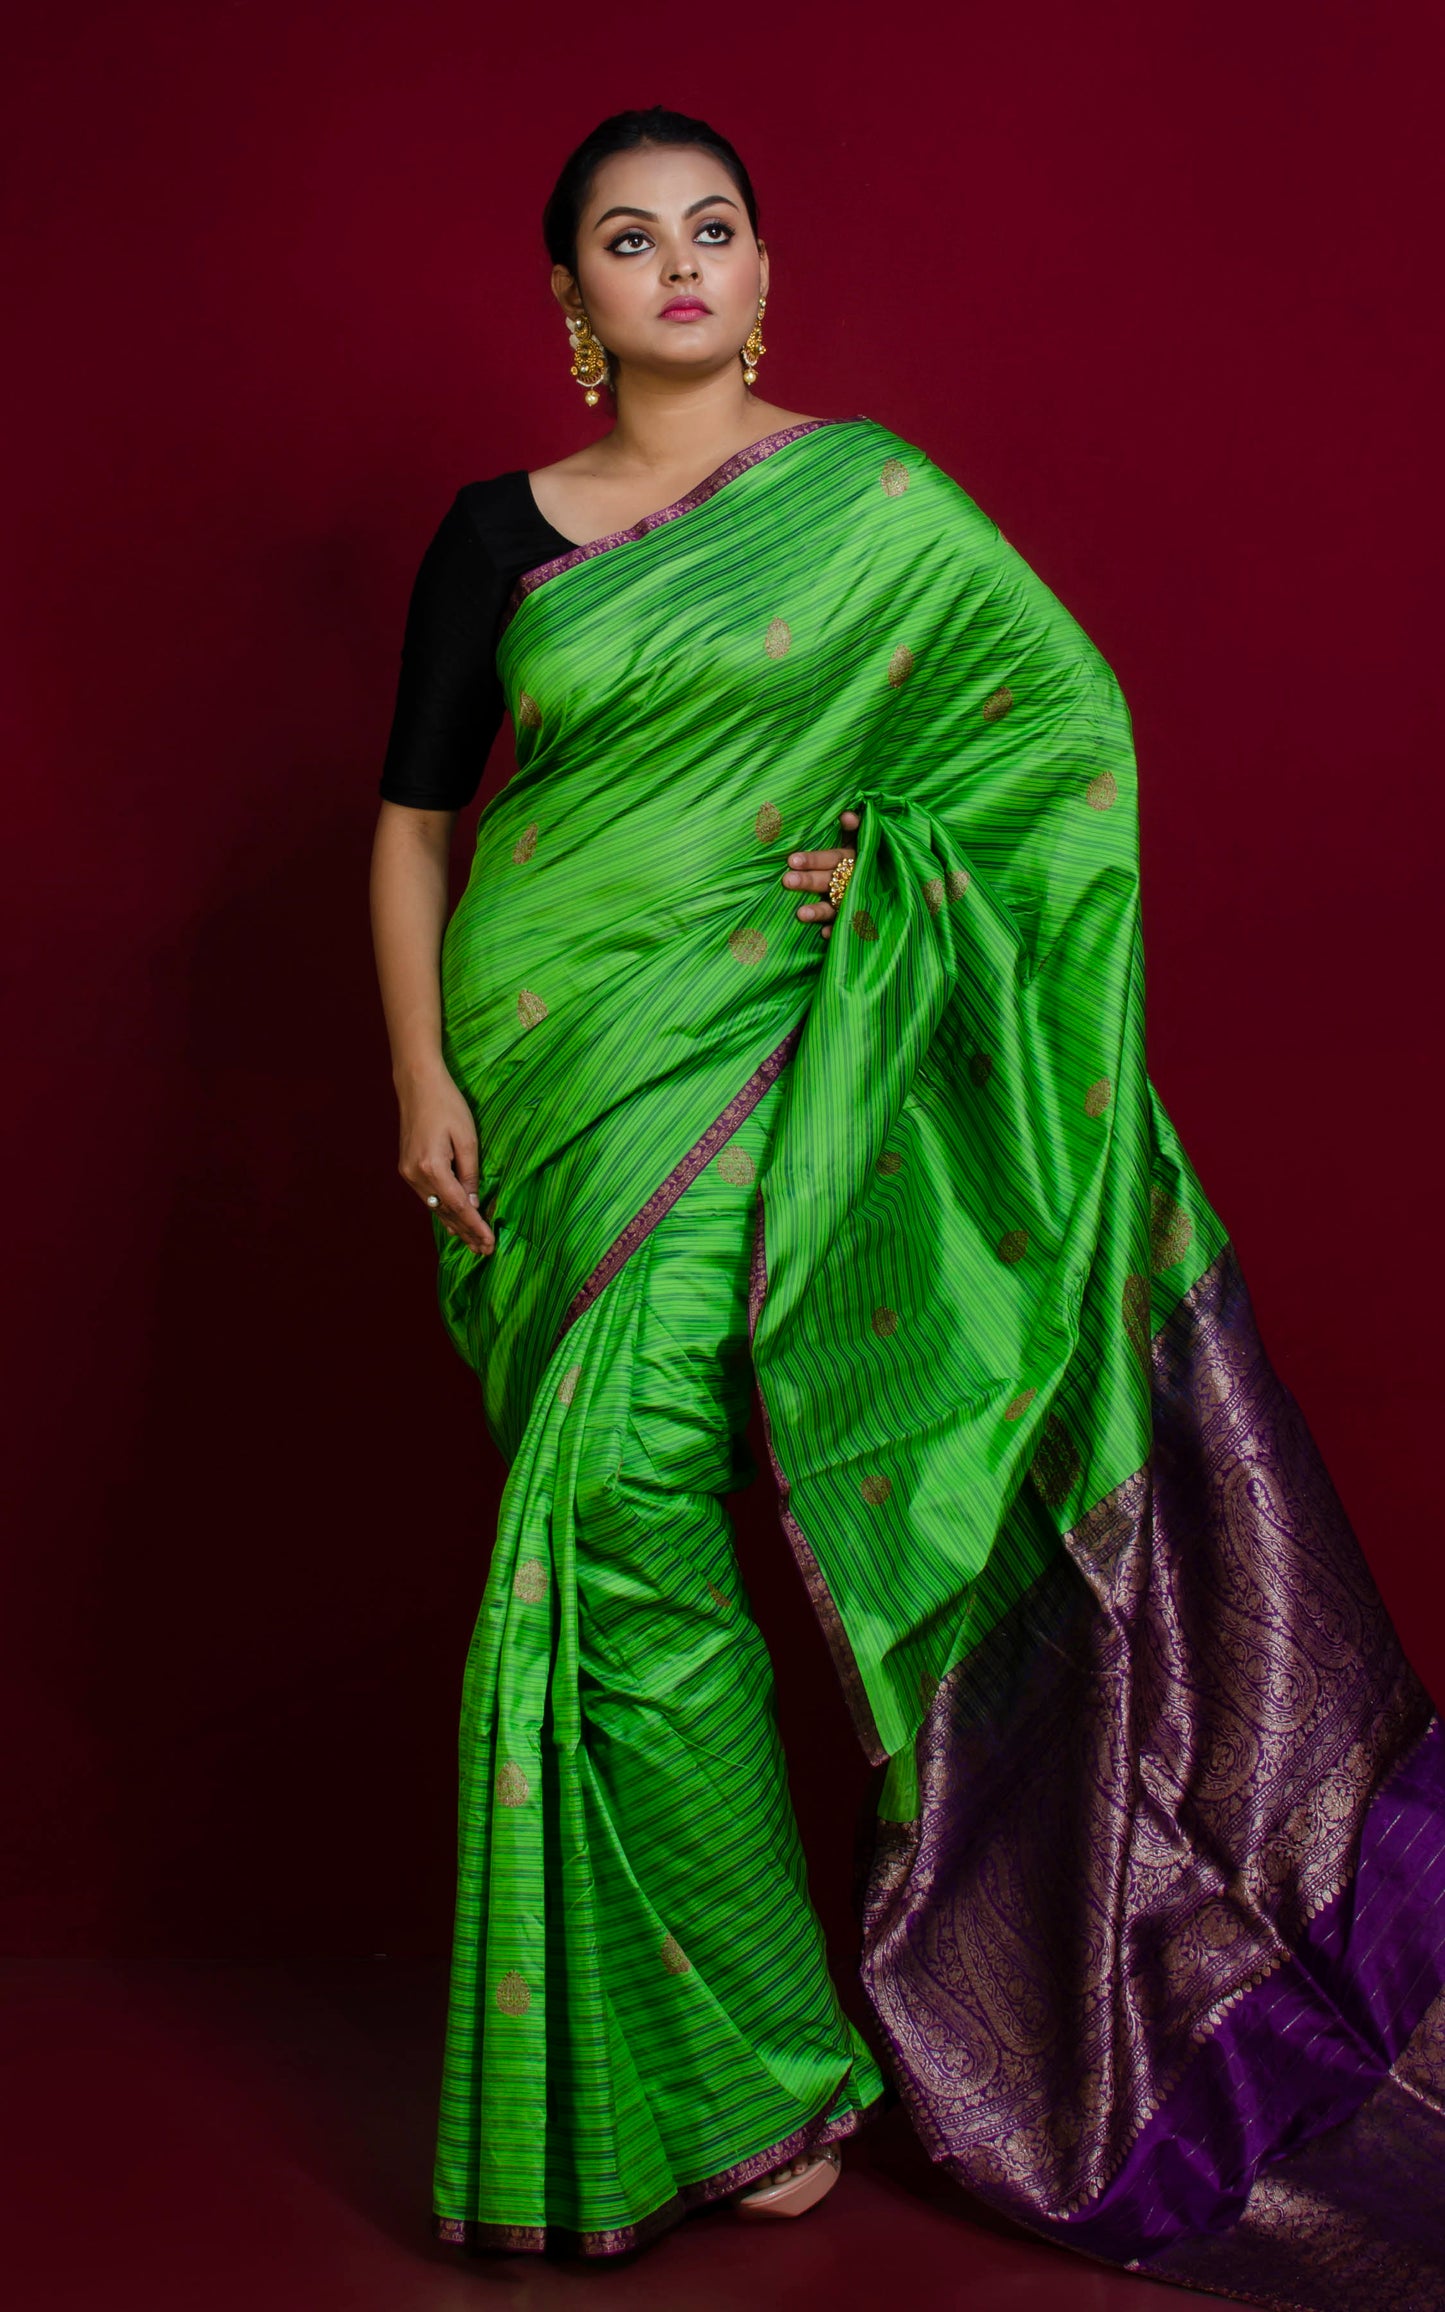 Woven Thread Nakshi Work Koniya Motif Pure Katan Banarasi Silk Saree in Green, Indigo Blue and Antique Gold